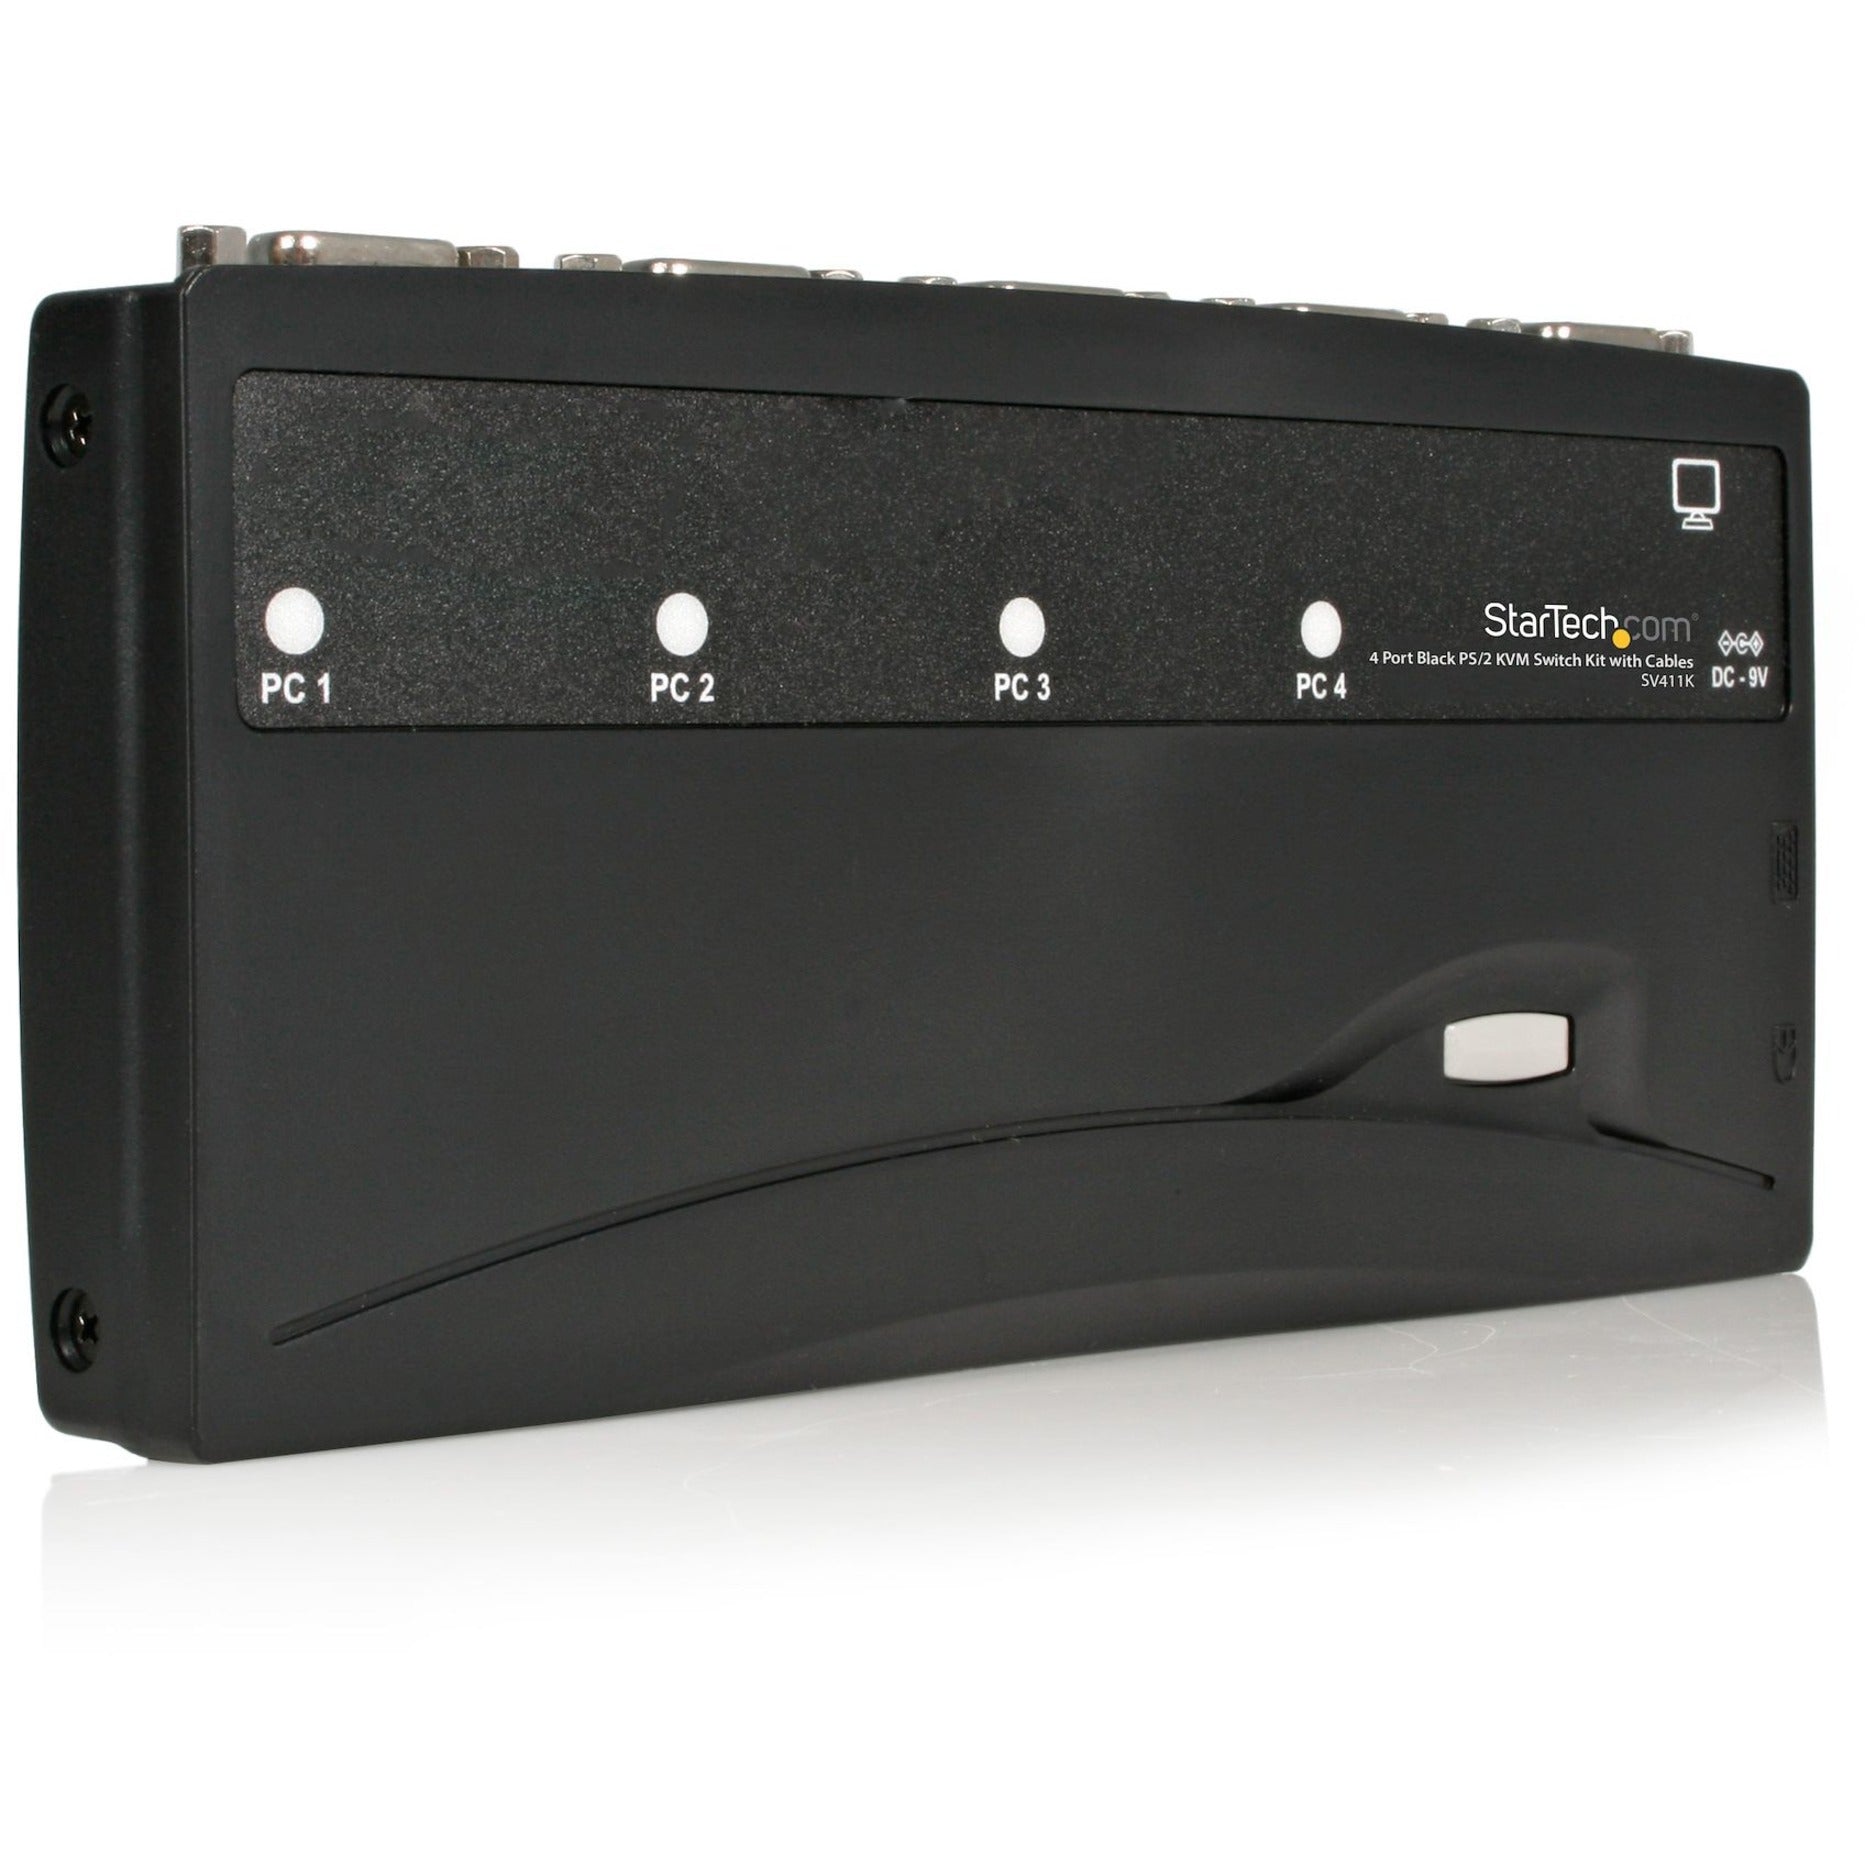 StarTech.com SV411K StarView 4 Port Compact KVM Switchbox, VGA, PS/2 Port, 1920 x 1440 Resolution, 2 Year Warranty